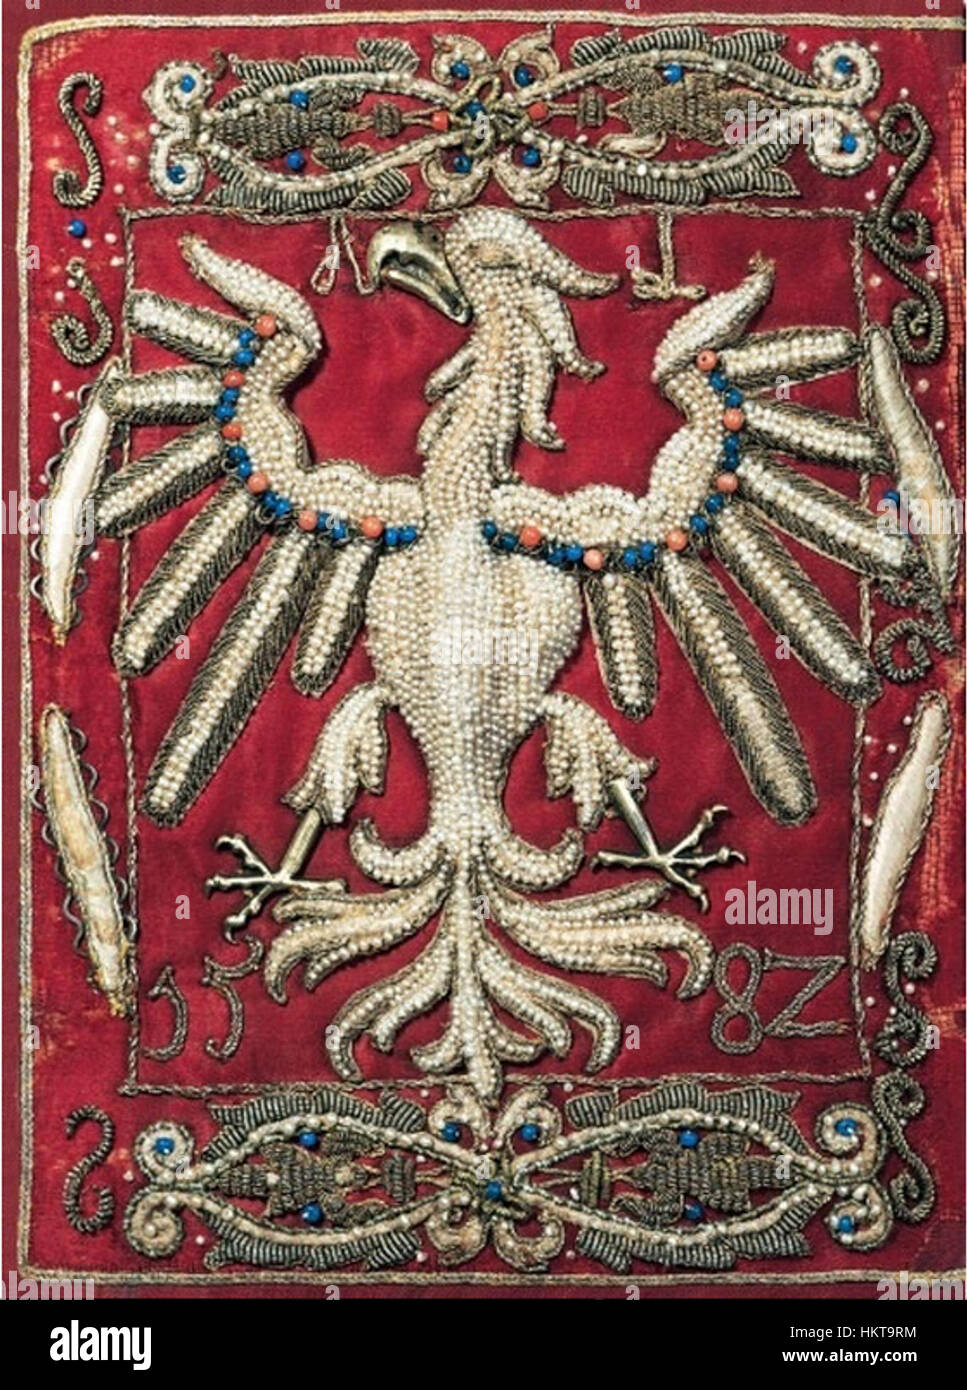 Embroidered Polish eagle by Anna Jagiellon Stock Photo